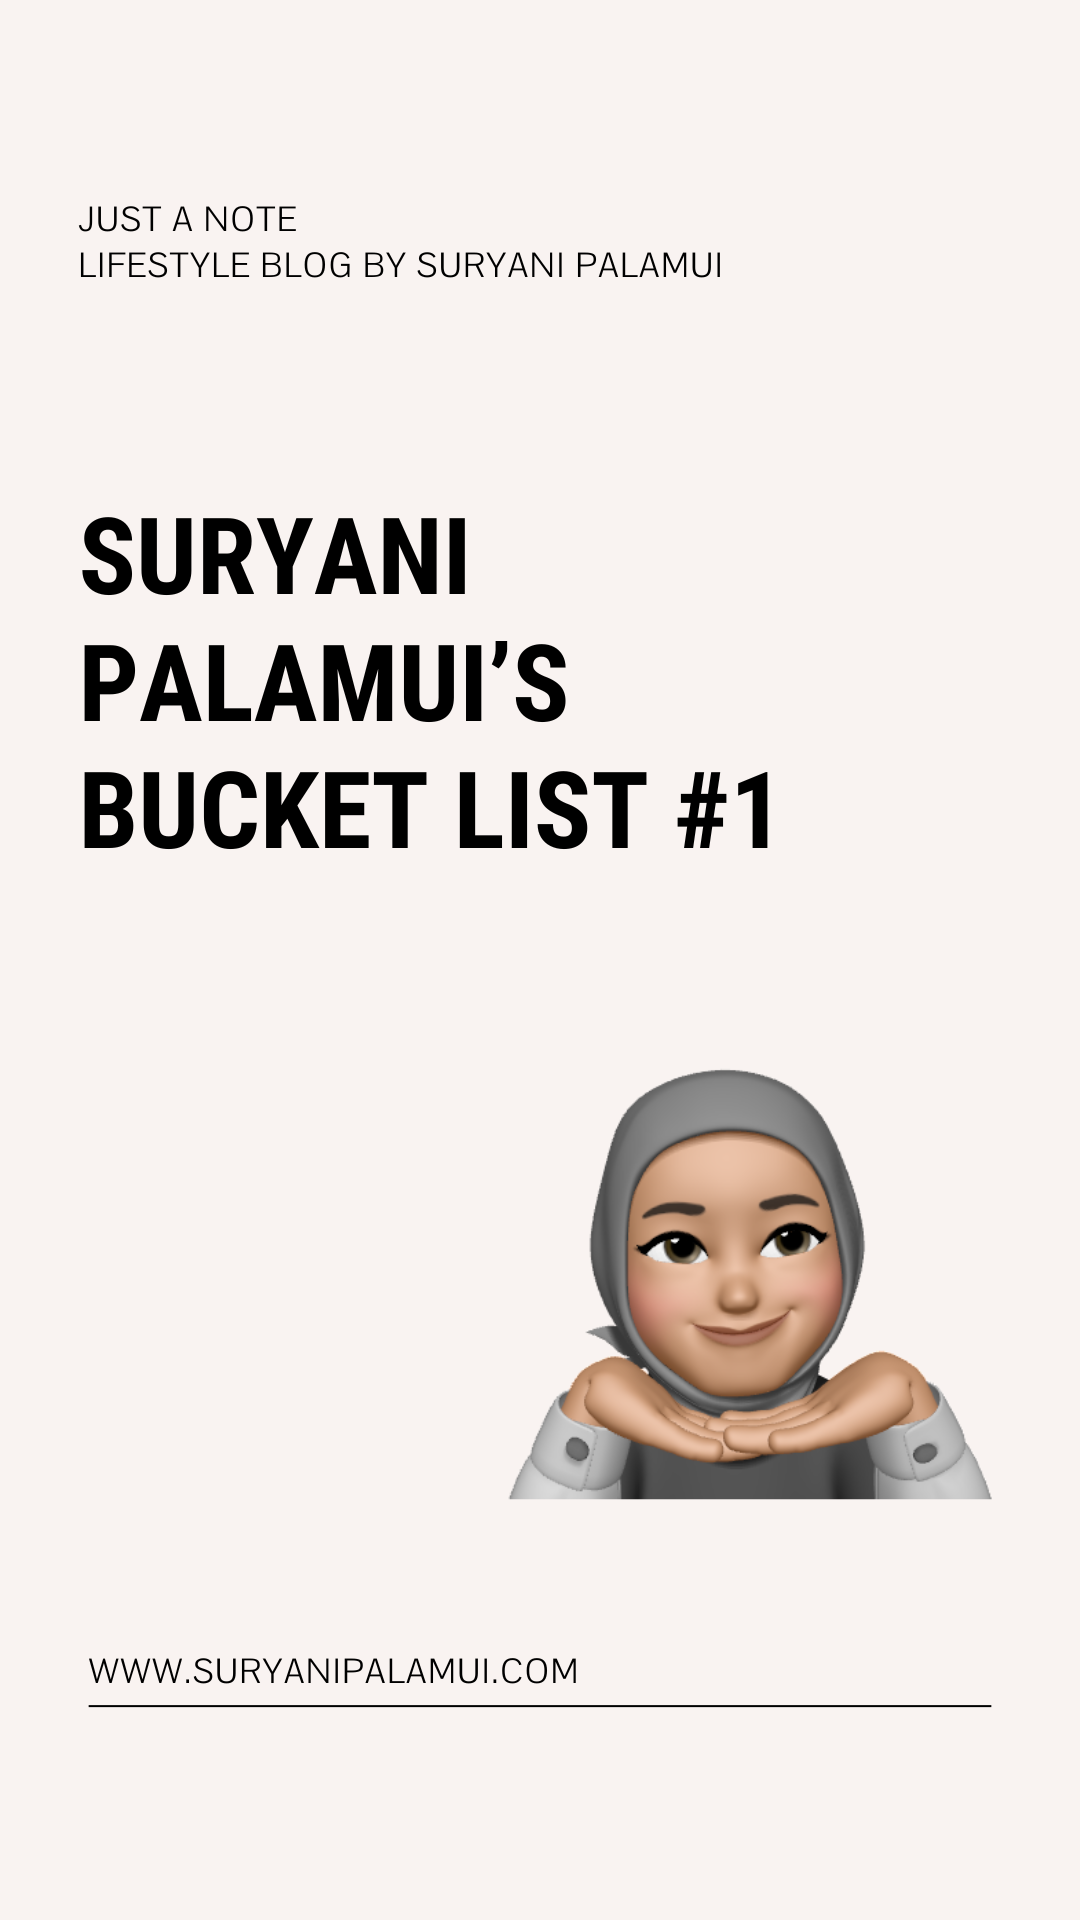 Suryani Palamui's Bucket List #1